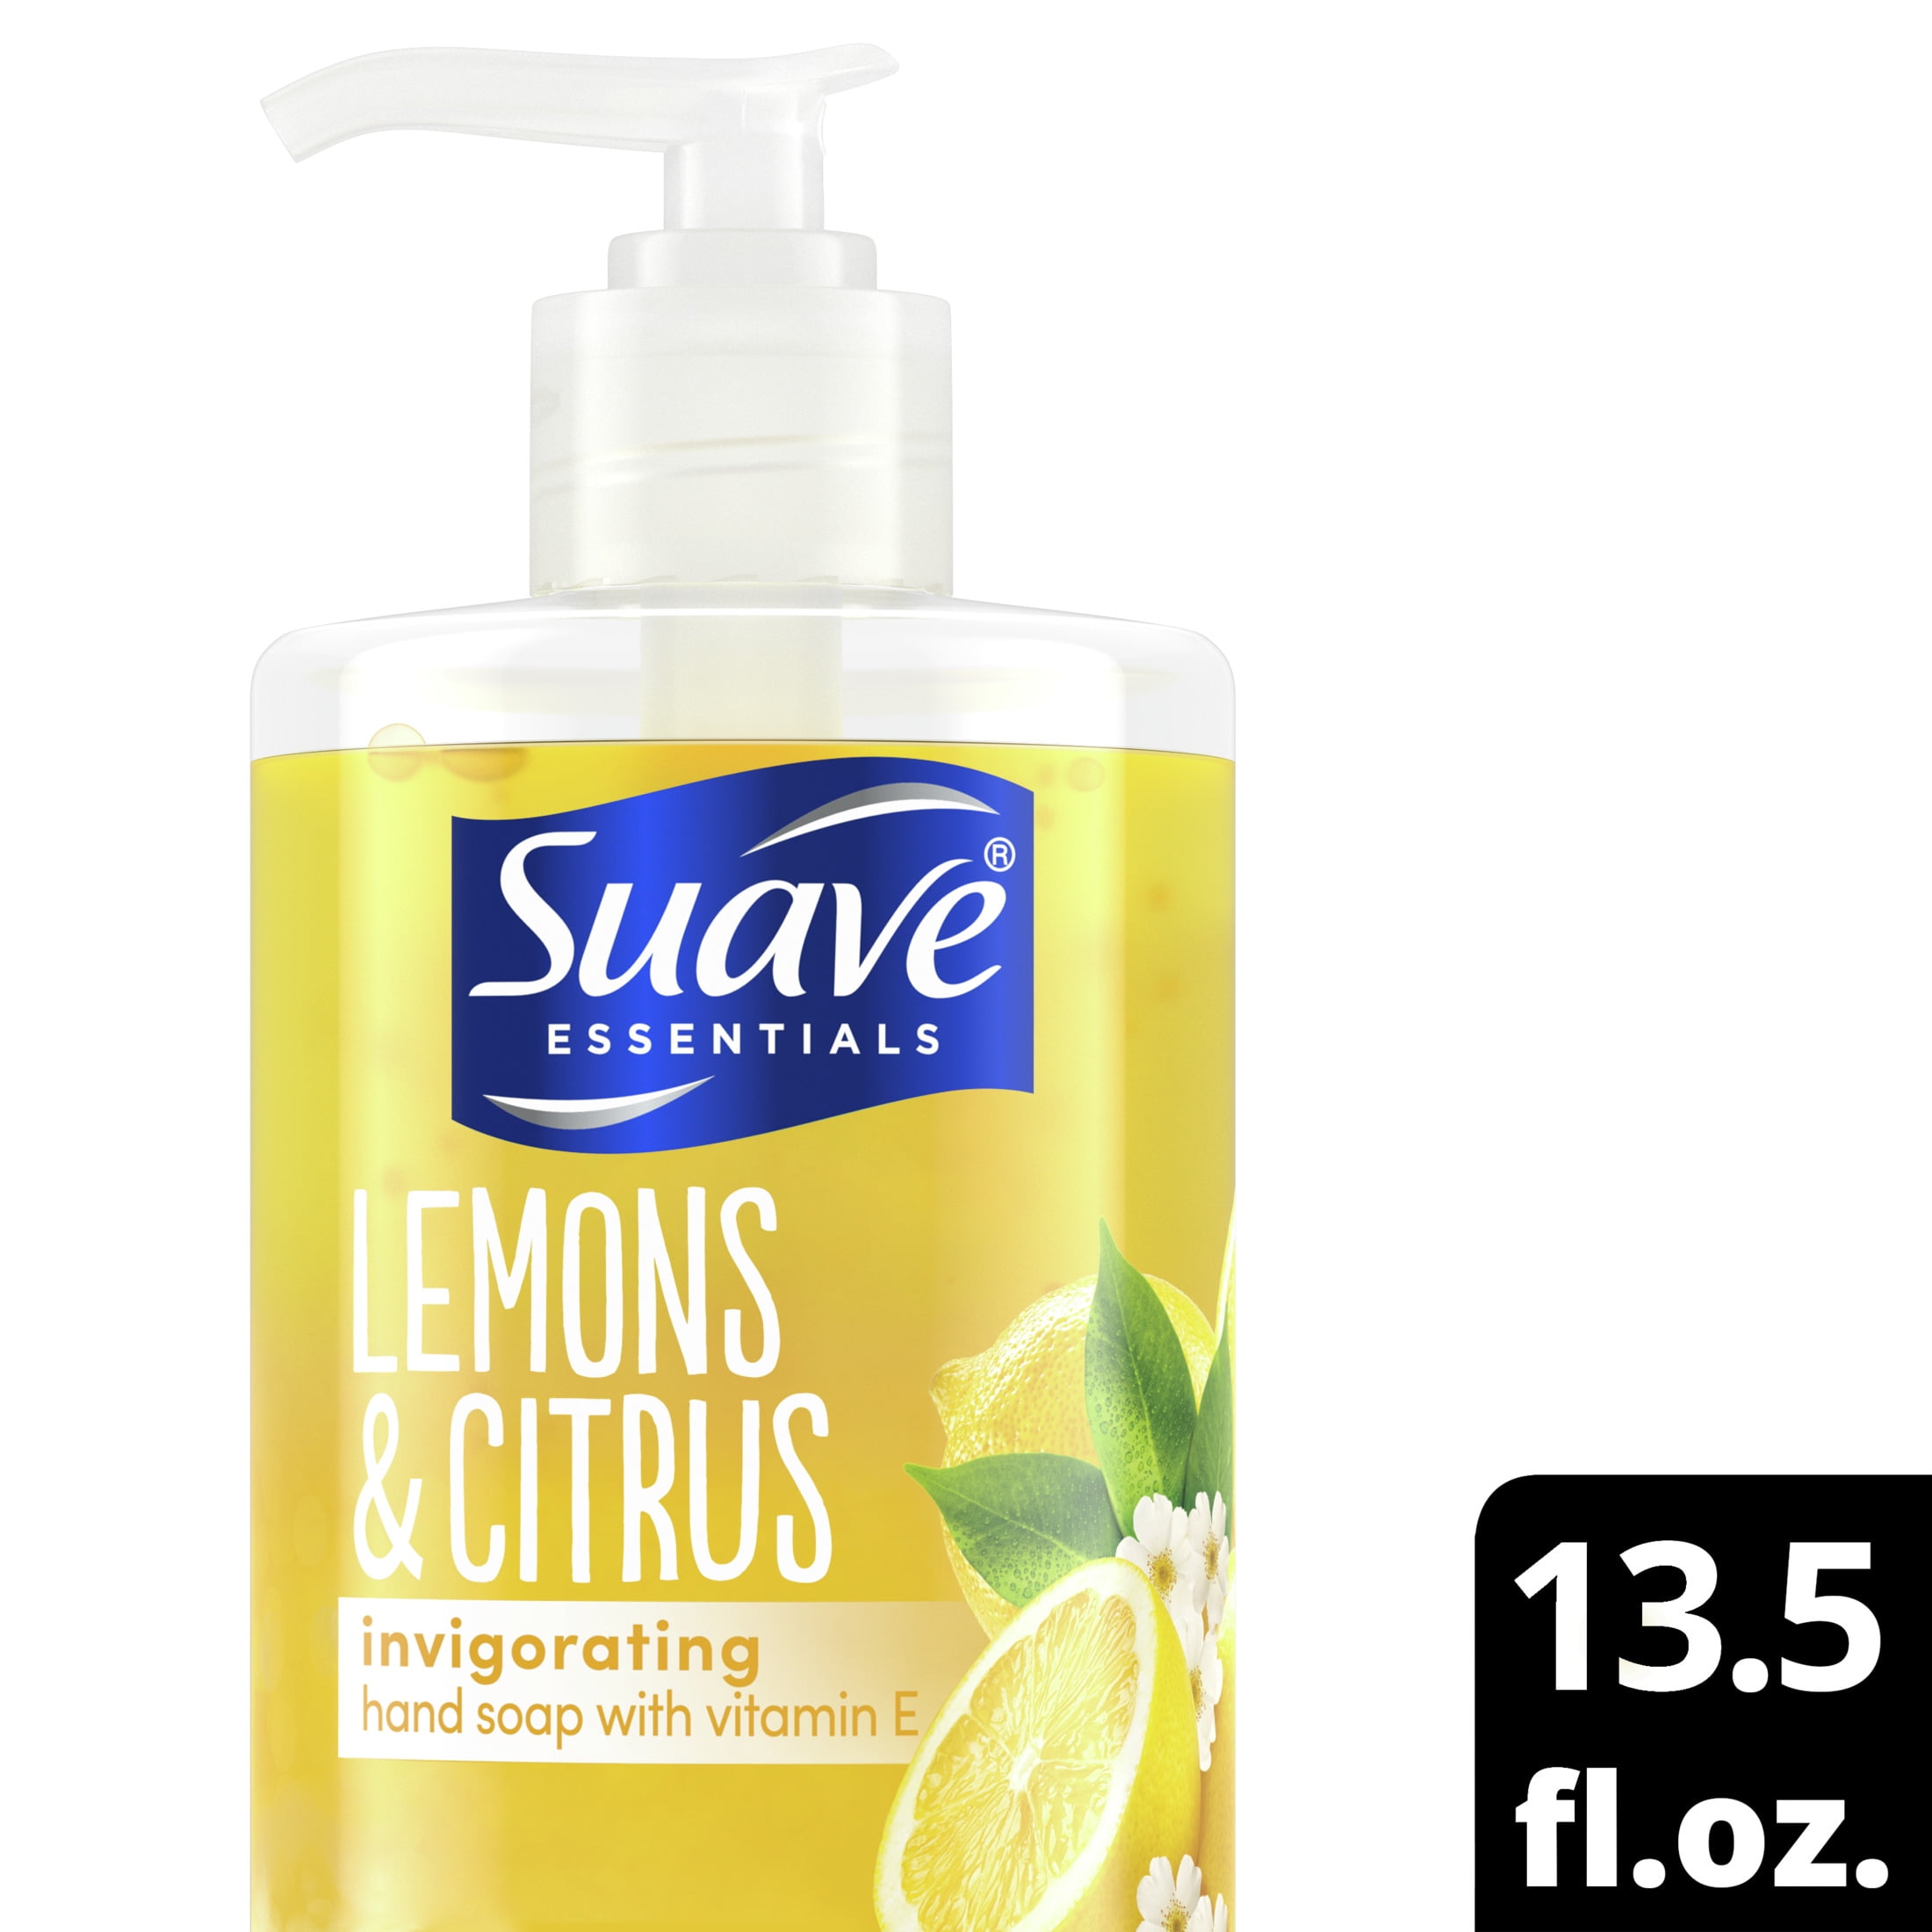 Suave Essentials Lemon & Citrus Invigorating Hand Soap With Vitamin E 13.5 fl oz